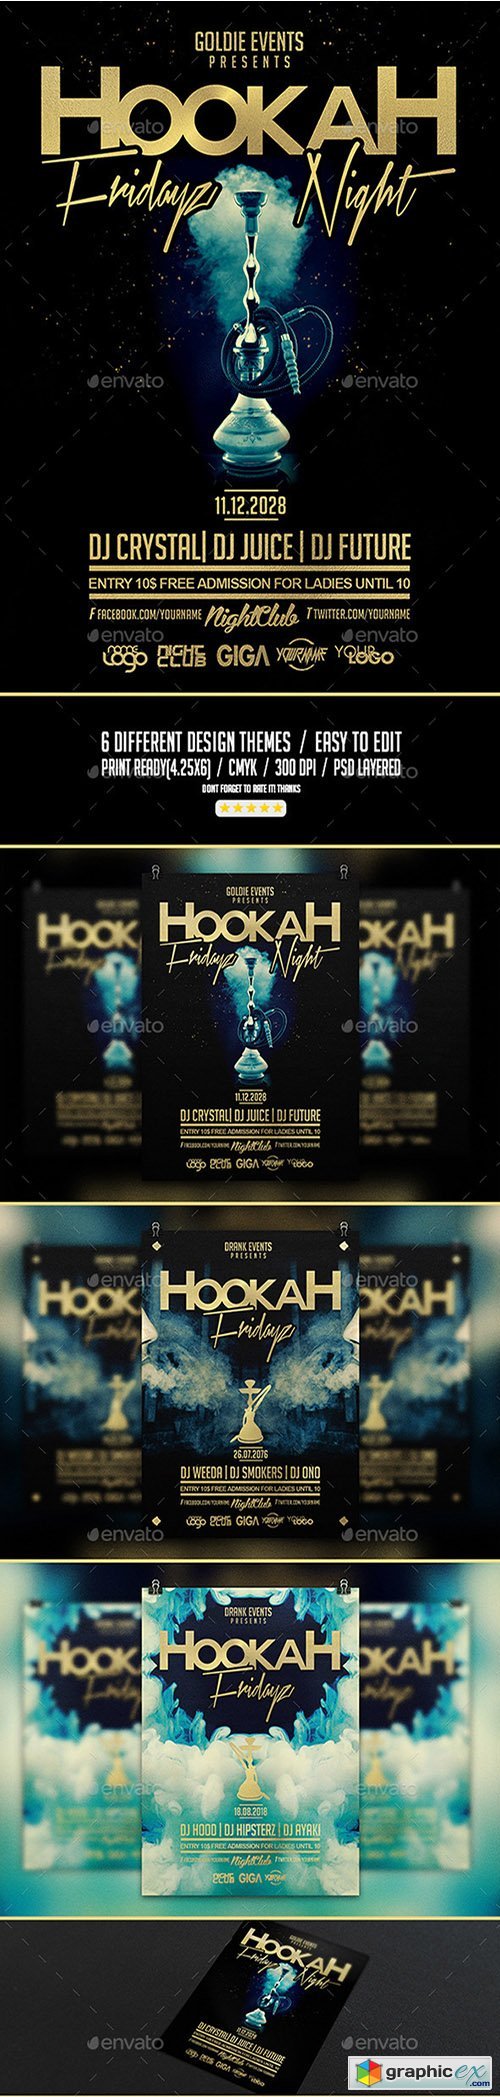 Hookah Fridayz Night | Party PSD Flyer Template